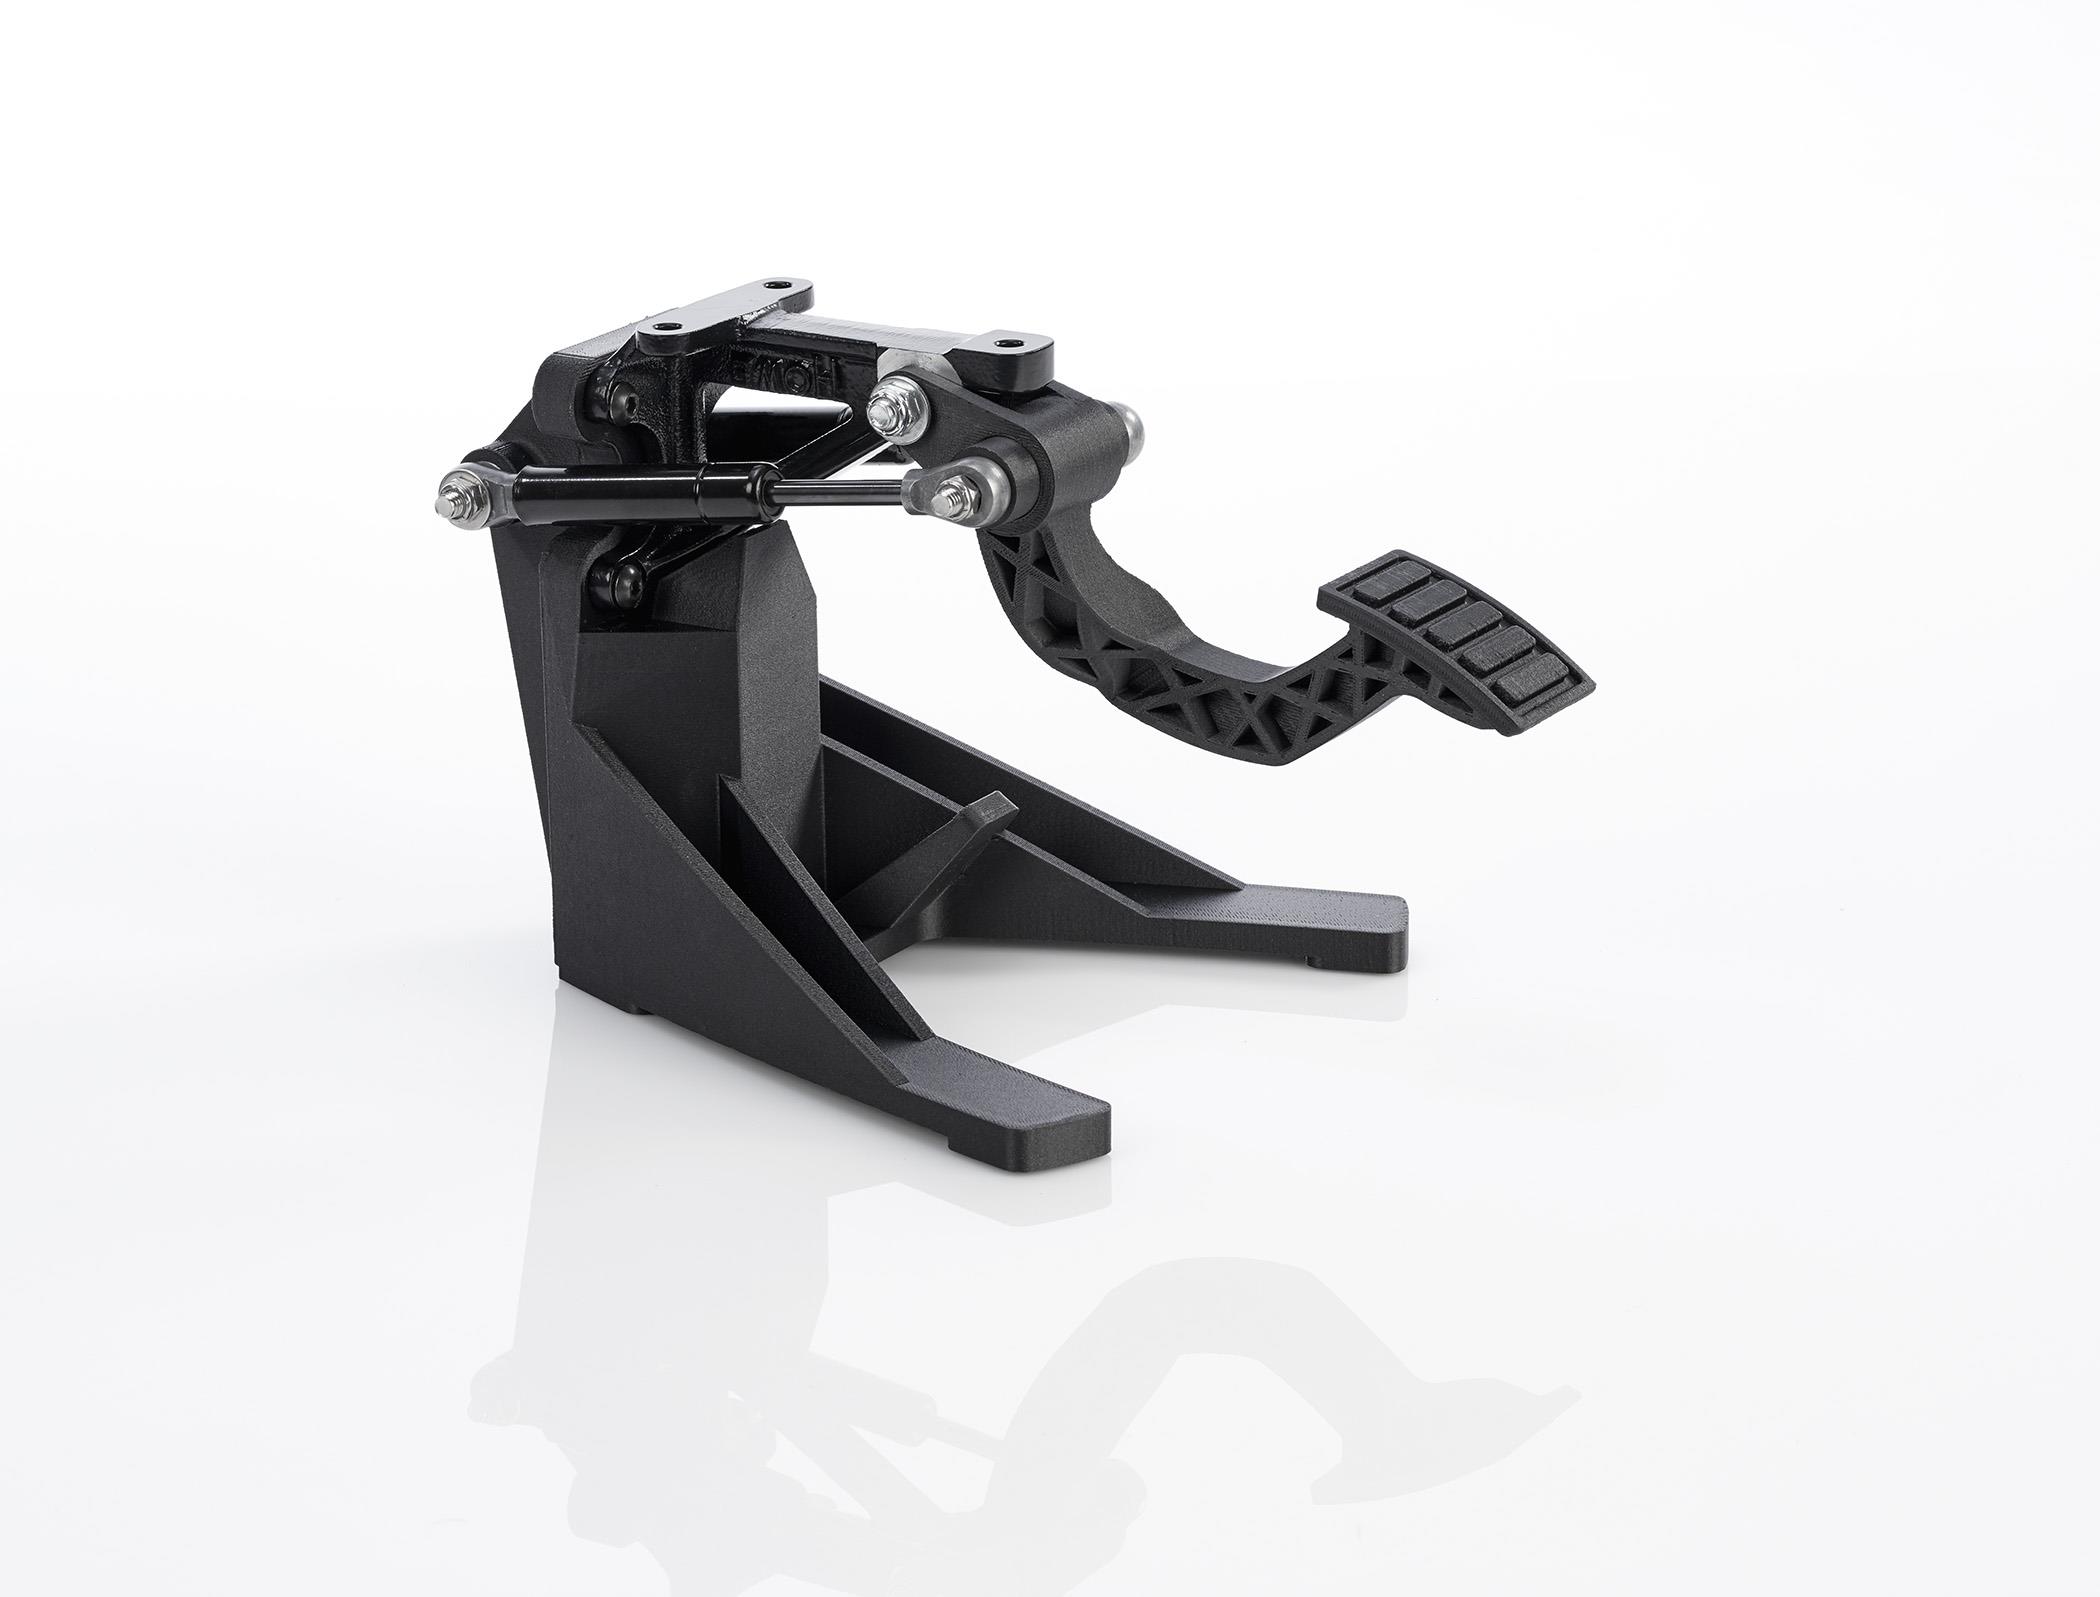 Nylon 12 CF (carbon-filled) 3D printed part, designed as a test brake unit. (Image courtesy Stratasys)